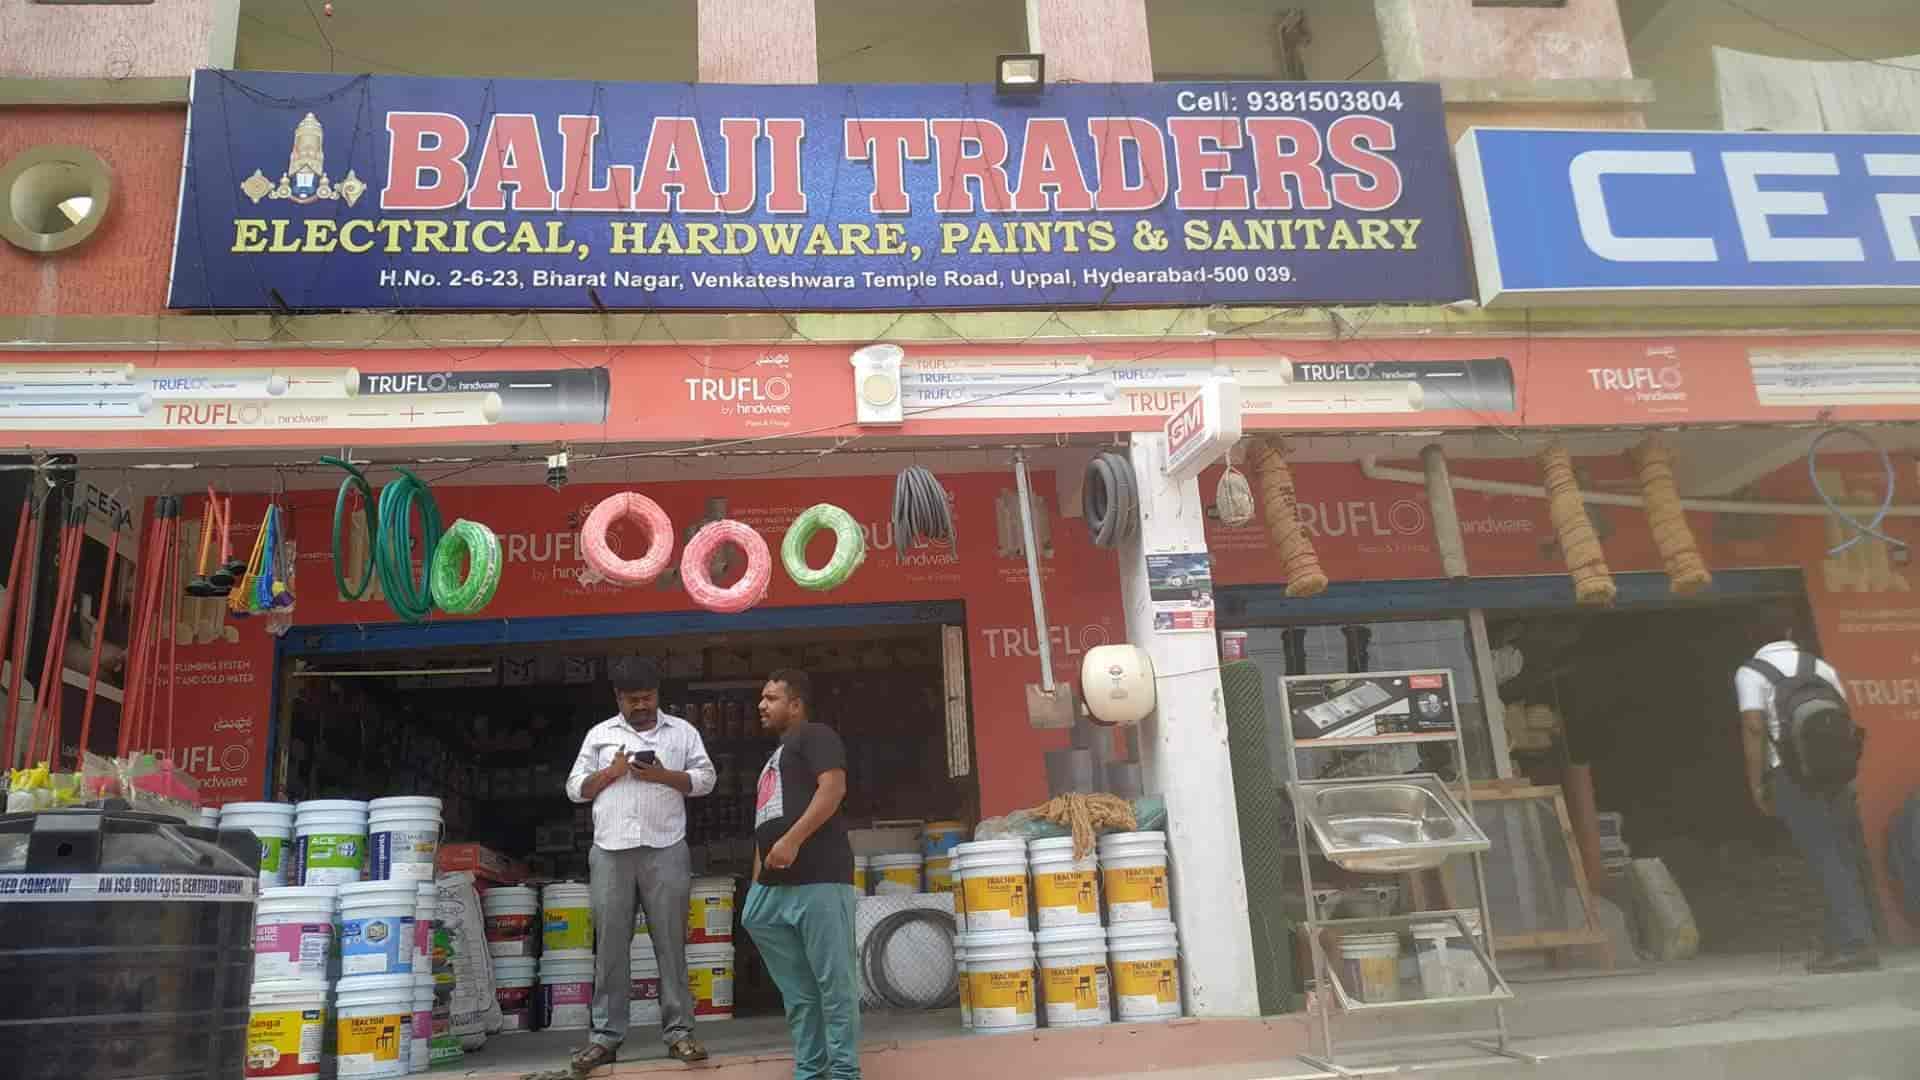 Sri balaji trader’s